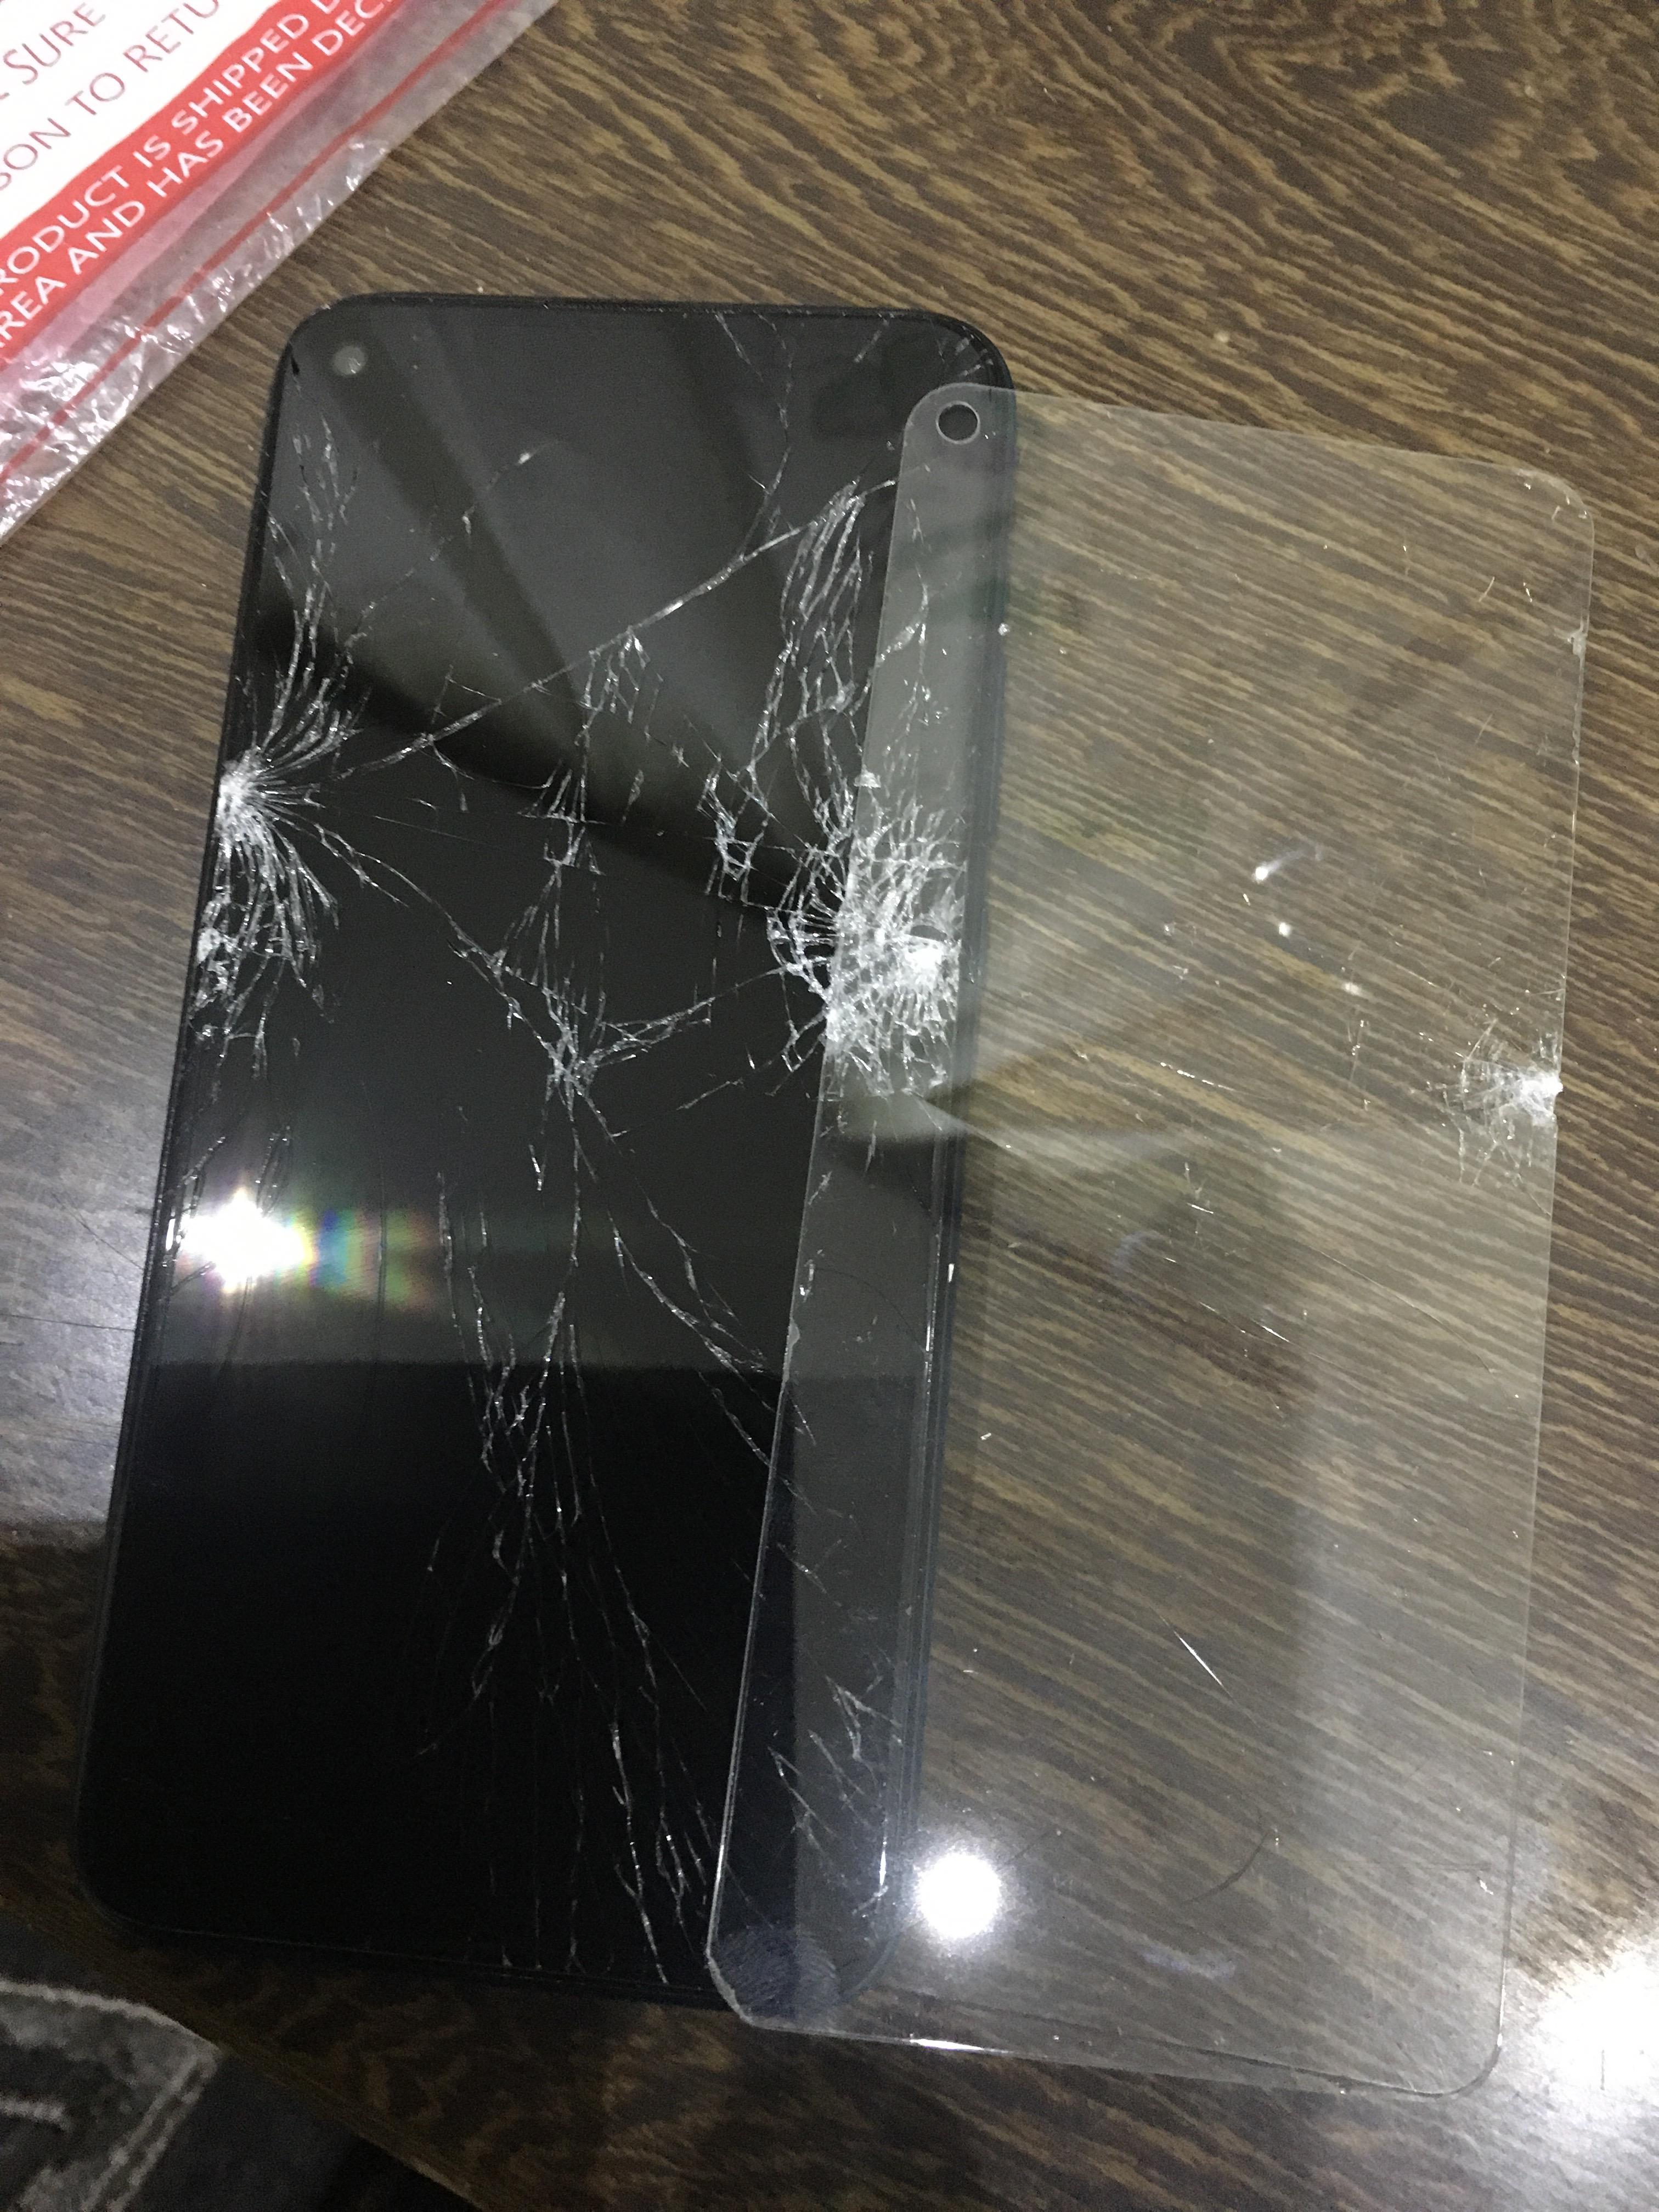 oppoa9屏幕摔碎的照片,oppoa9手机屏幕摔碎图片 - 伤感说说吧